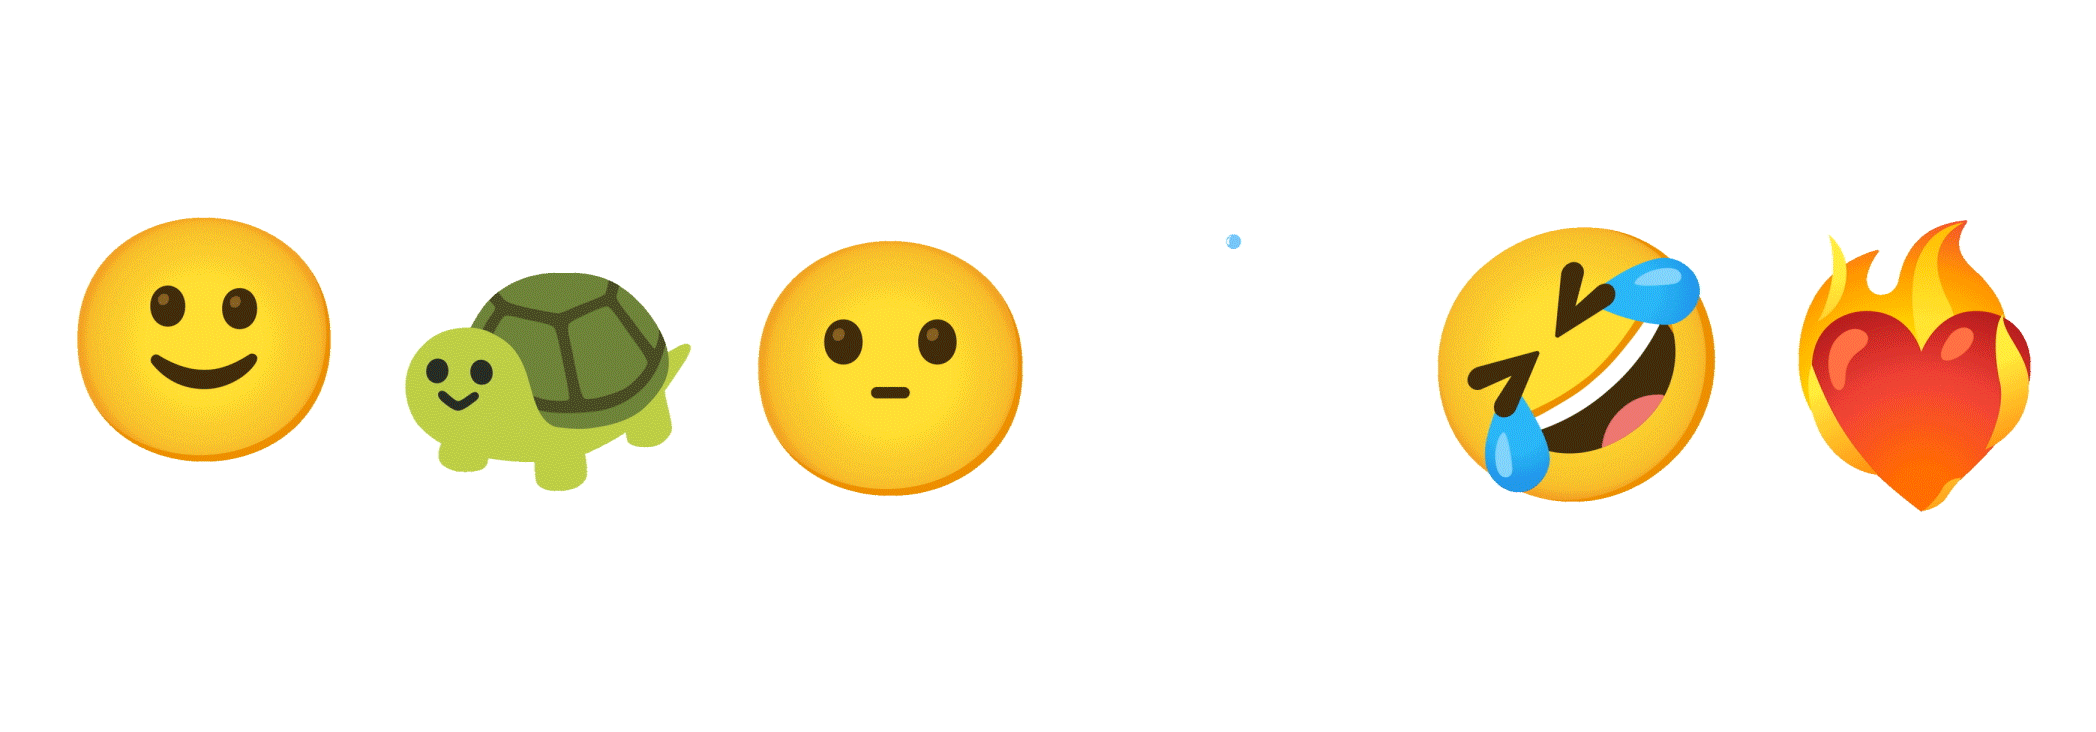 Emoji 15, animations, personalization: Google announces beautiful things for emojis